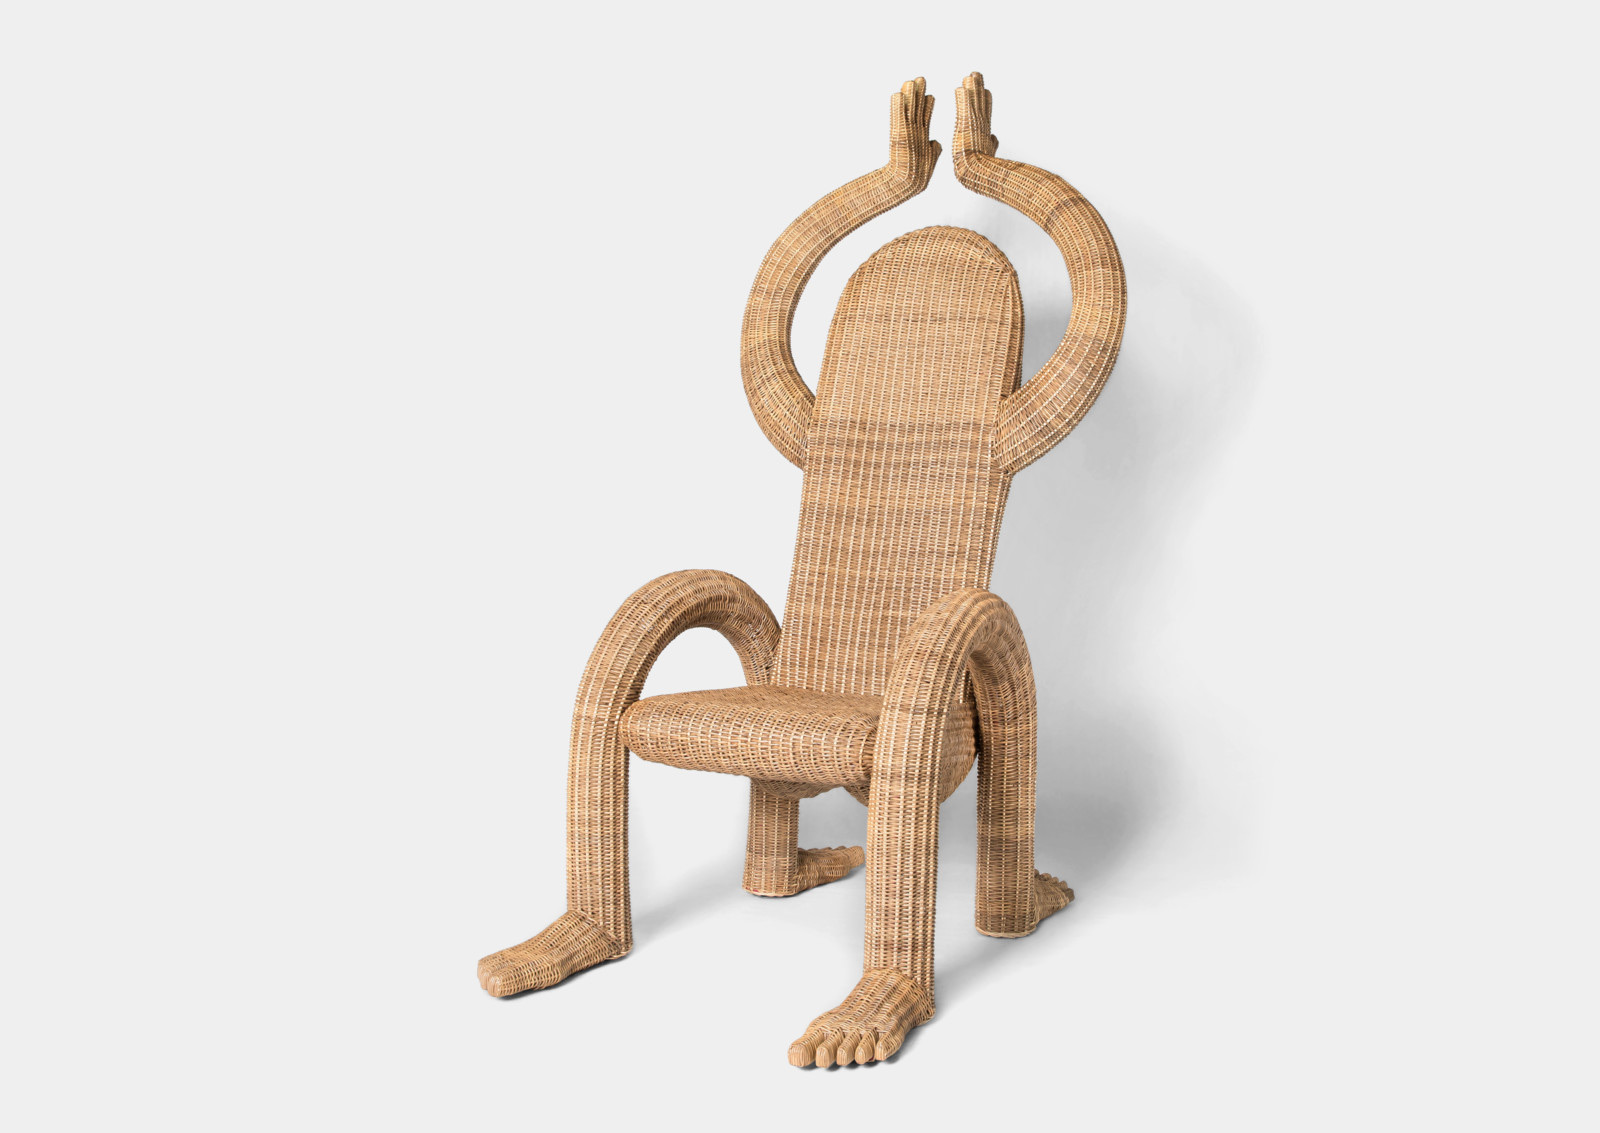 Chris Wolston设计的Nalgona俏皮椅子